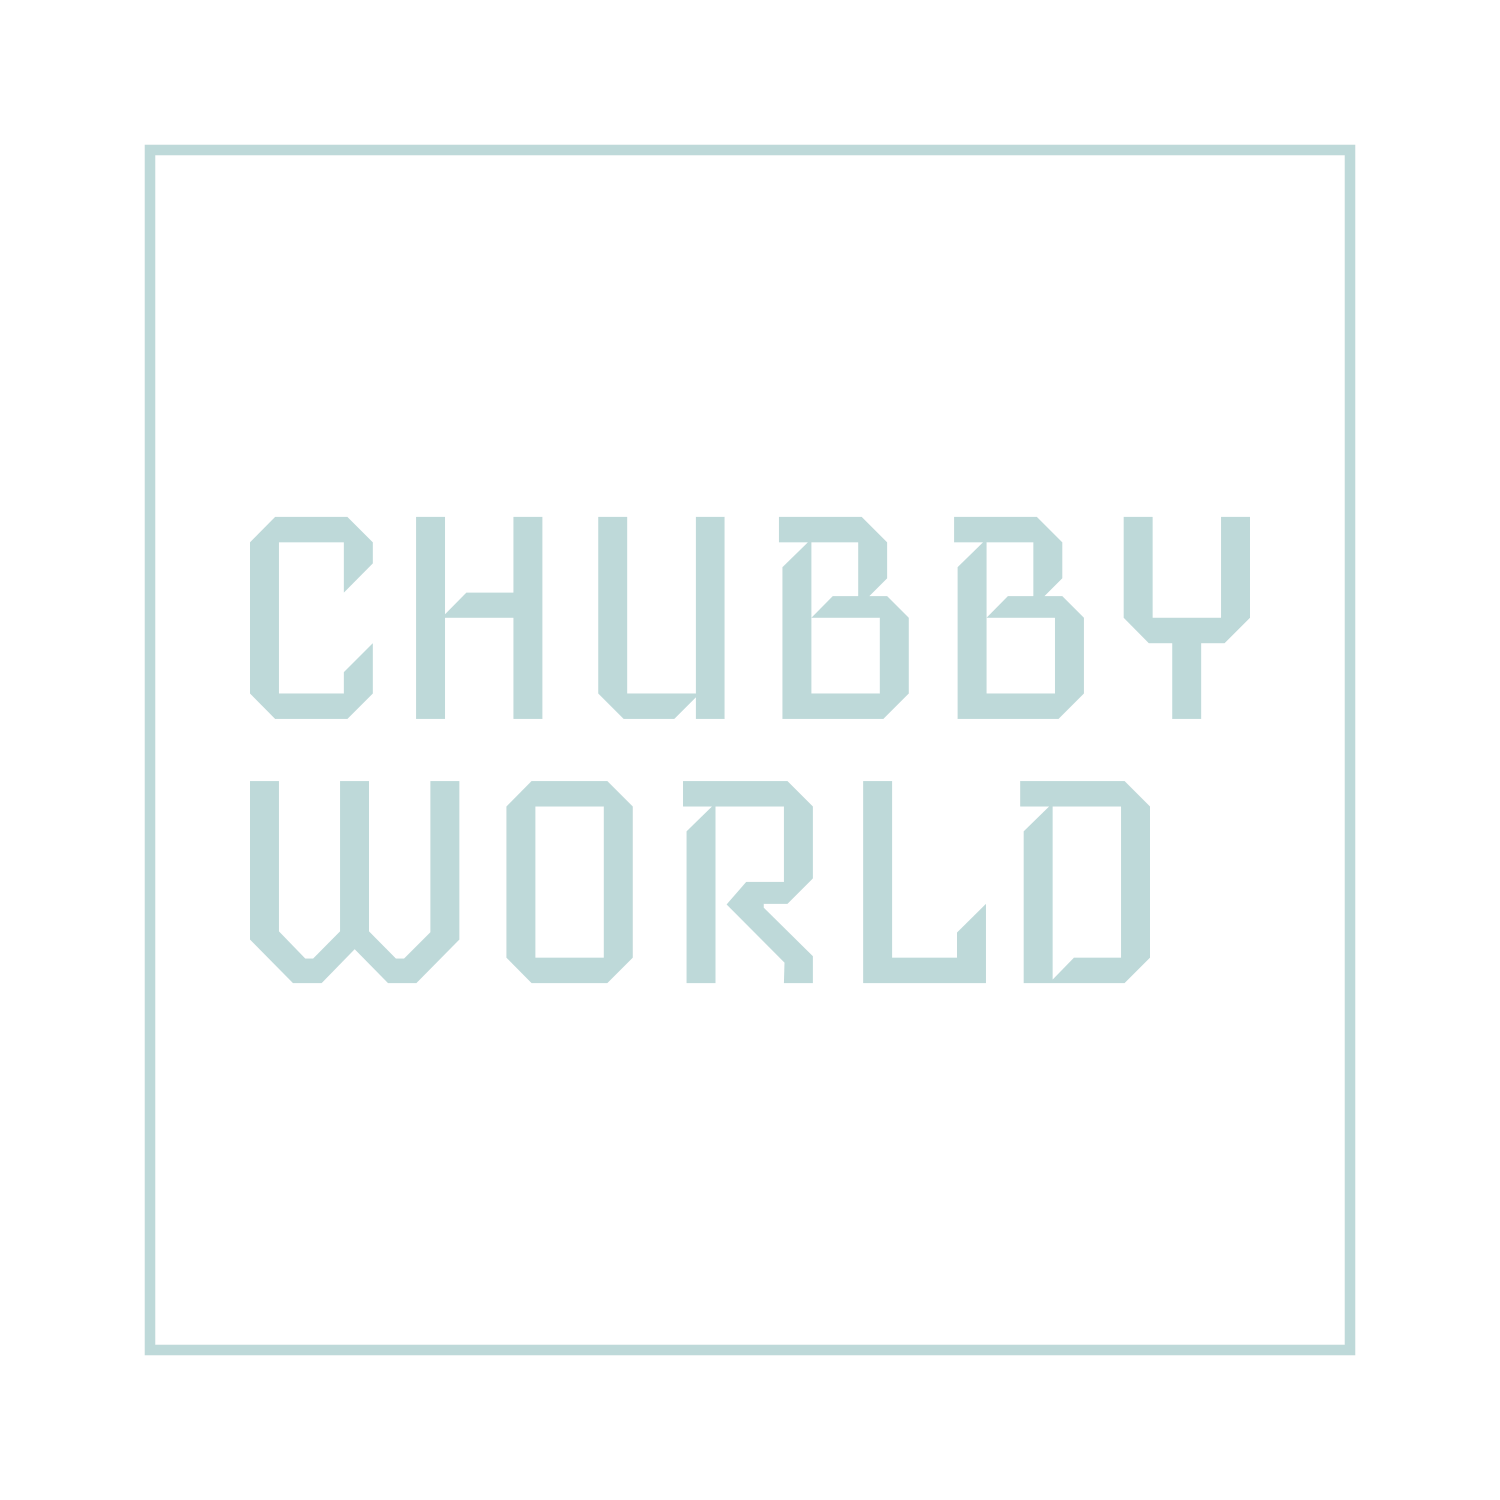 Chubby world